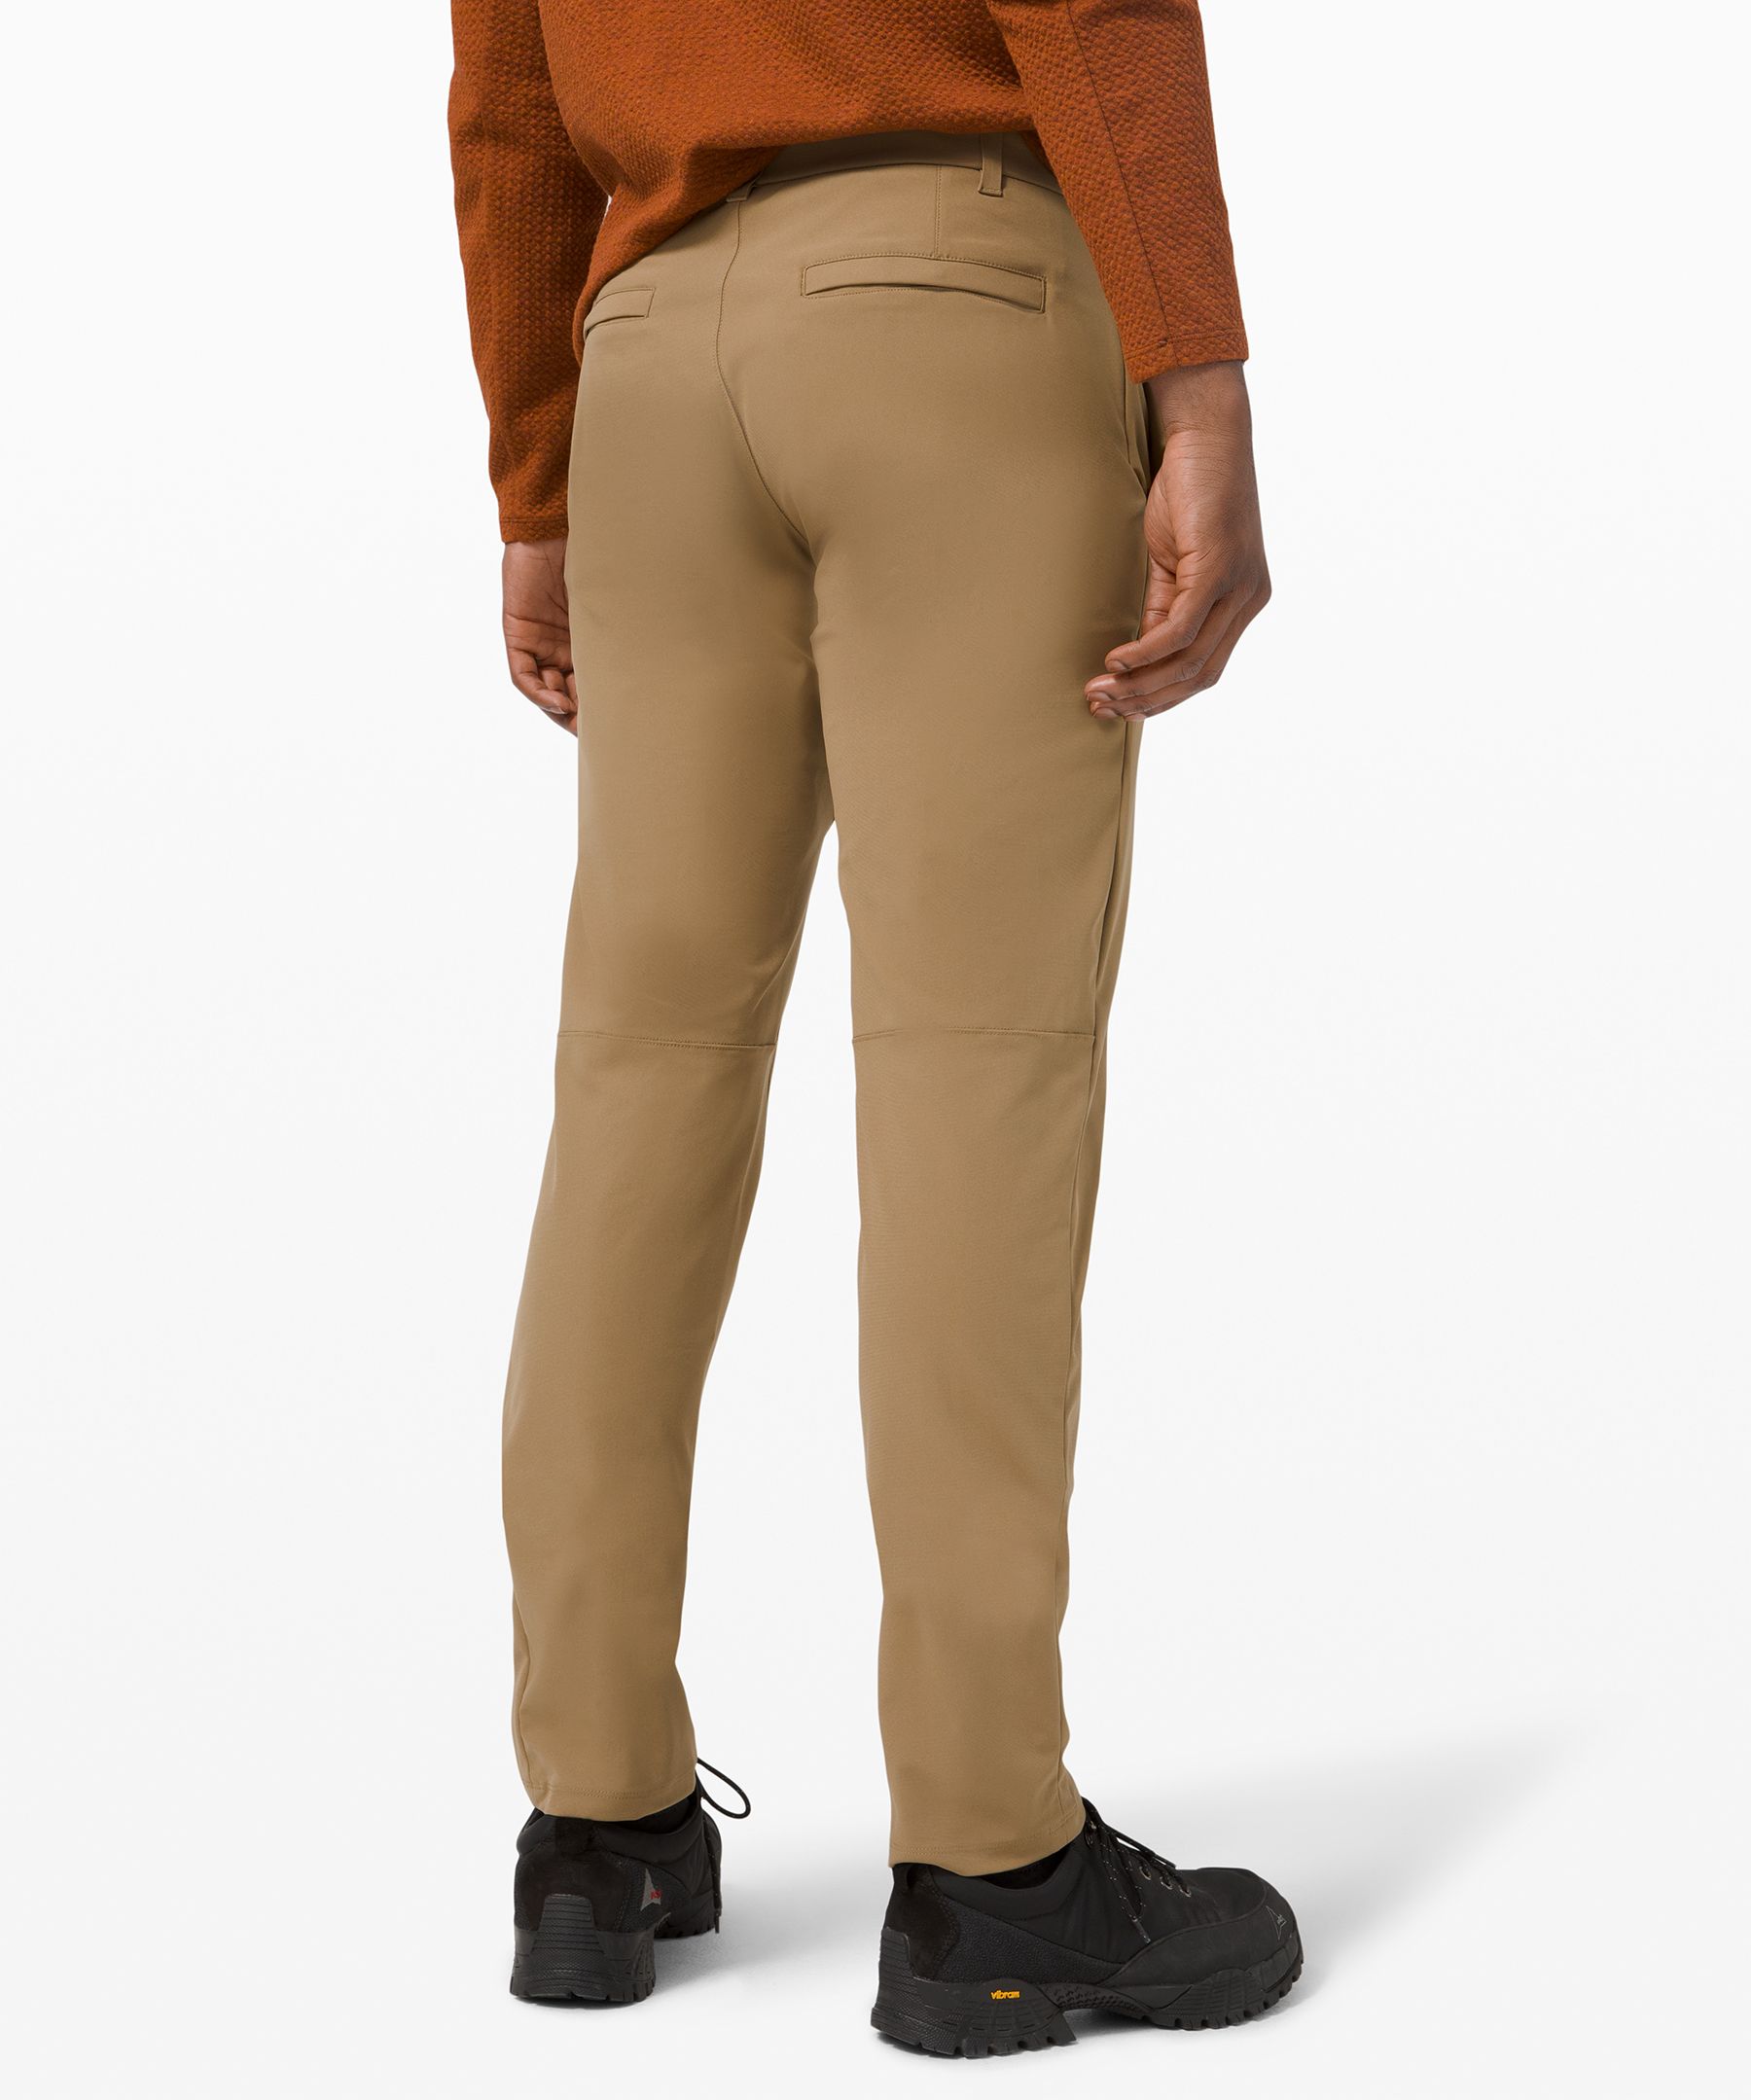 lululemon mens khaki pants